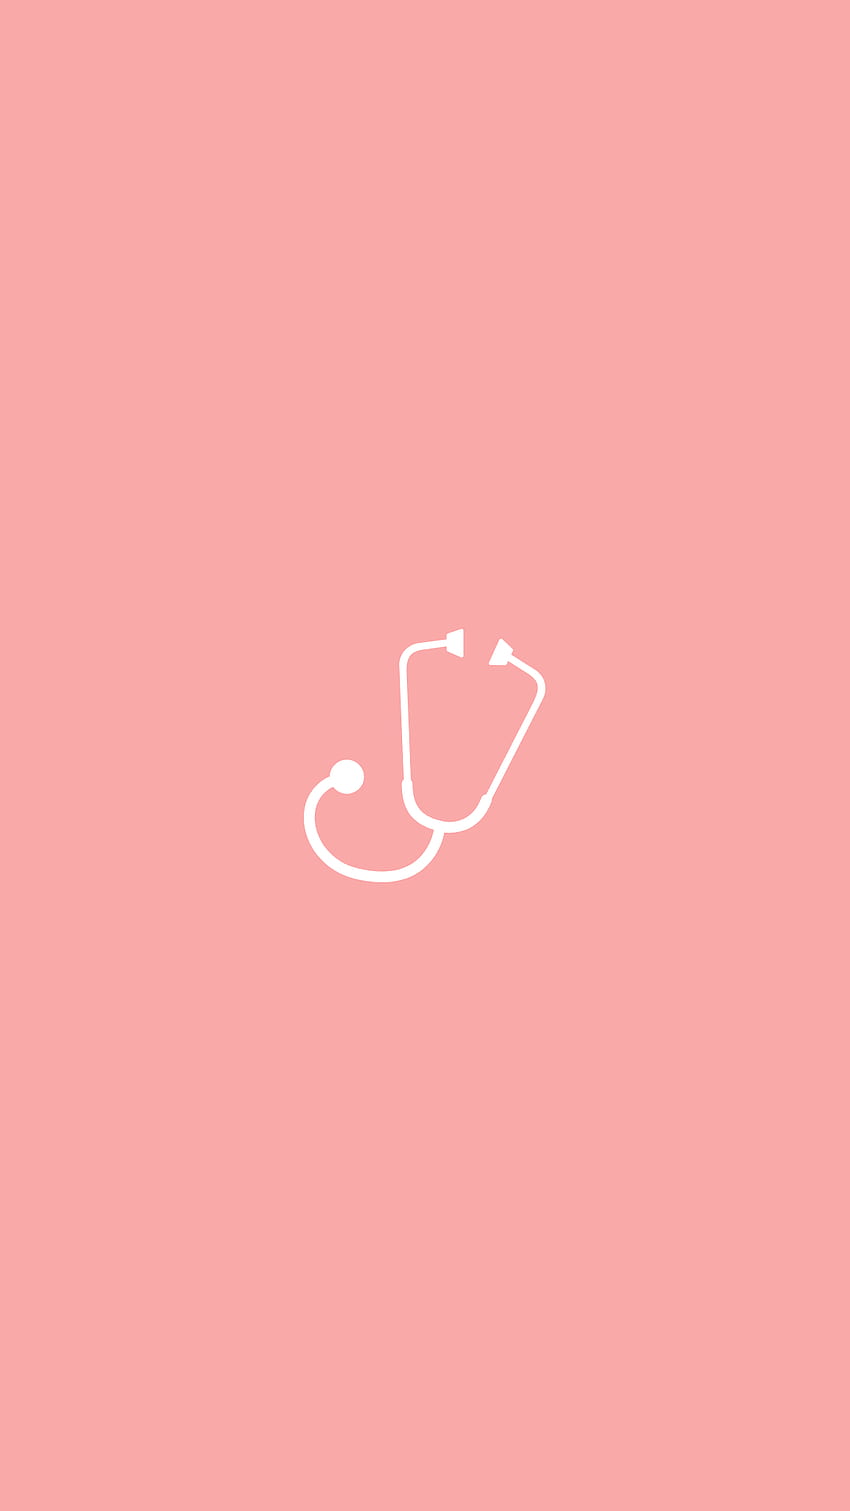 Stethoscope icon on a pink background - Nurse